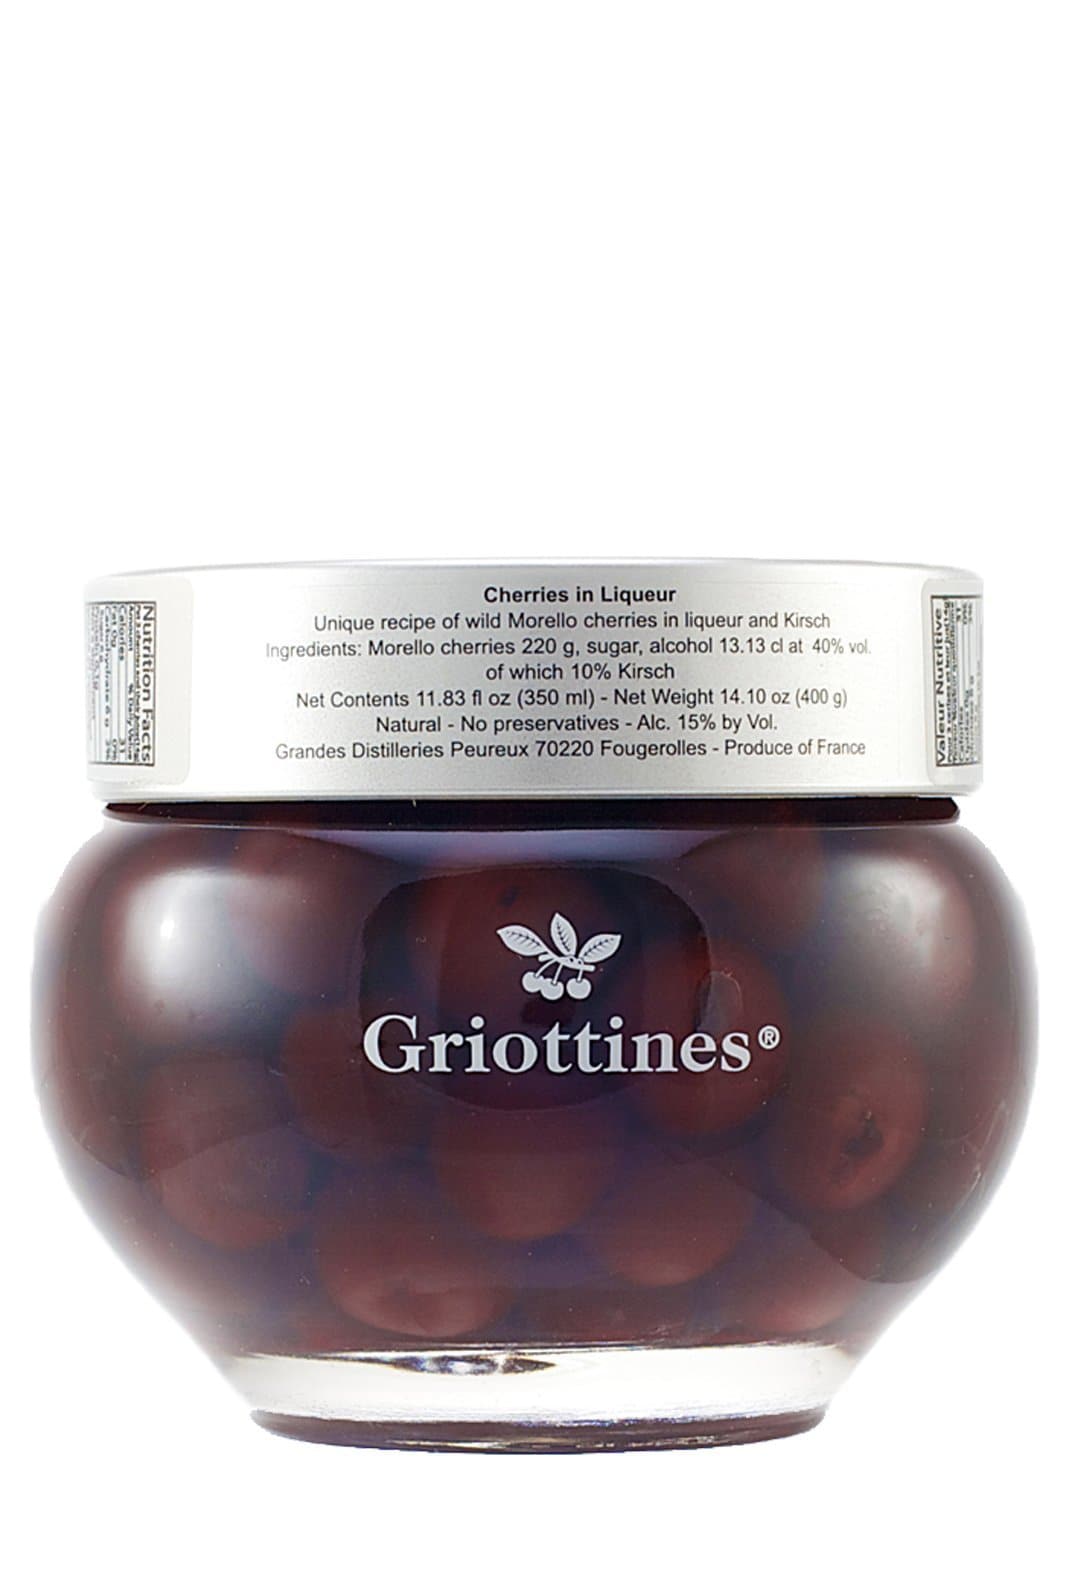 Peureux Griottines Jar (Sour cherries de-stoned in liqueur and kirsch) 15% 350ml | Liquor & Spirits | Shop online at Spirits of France